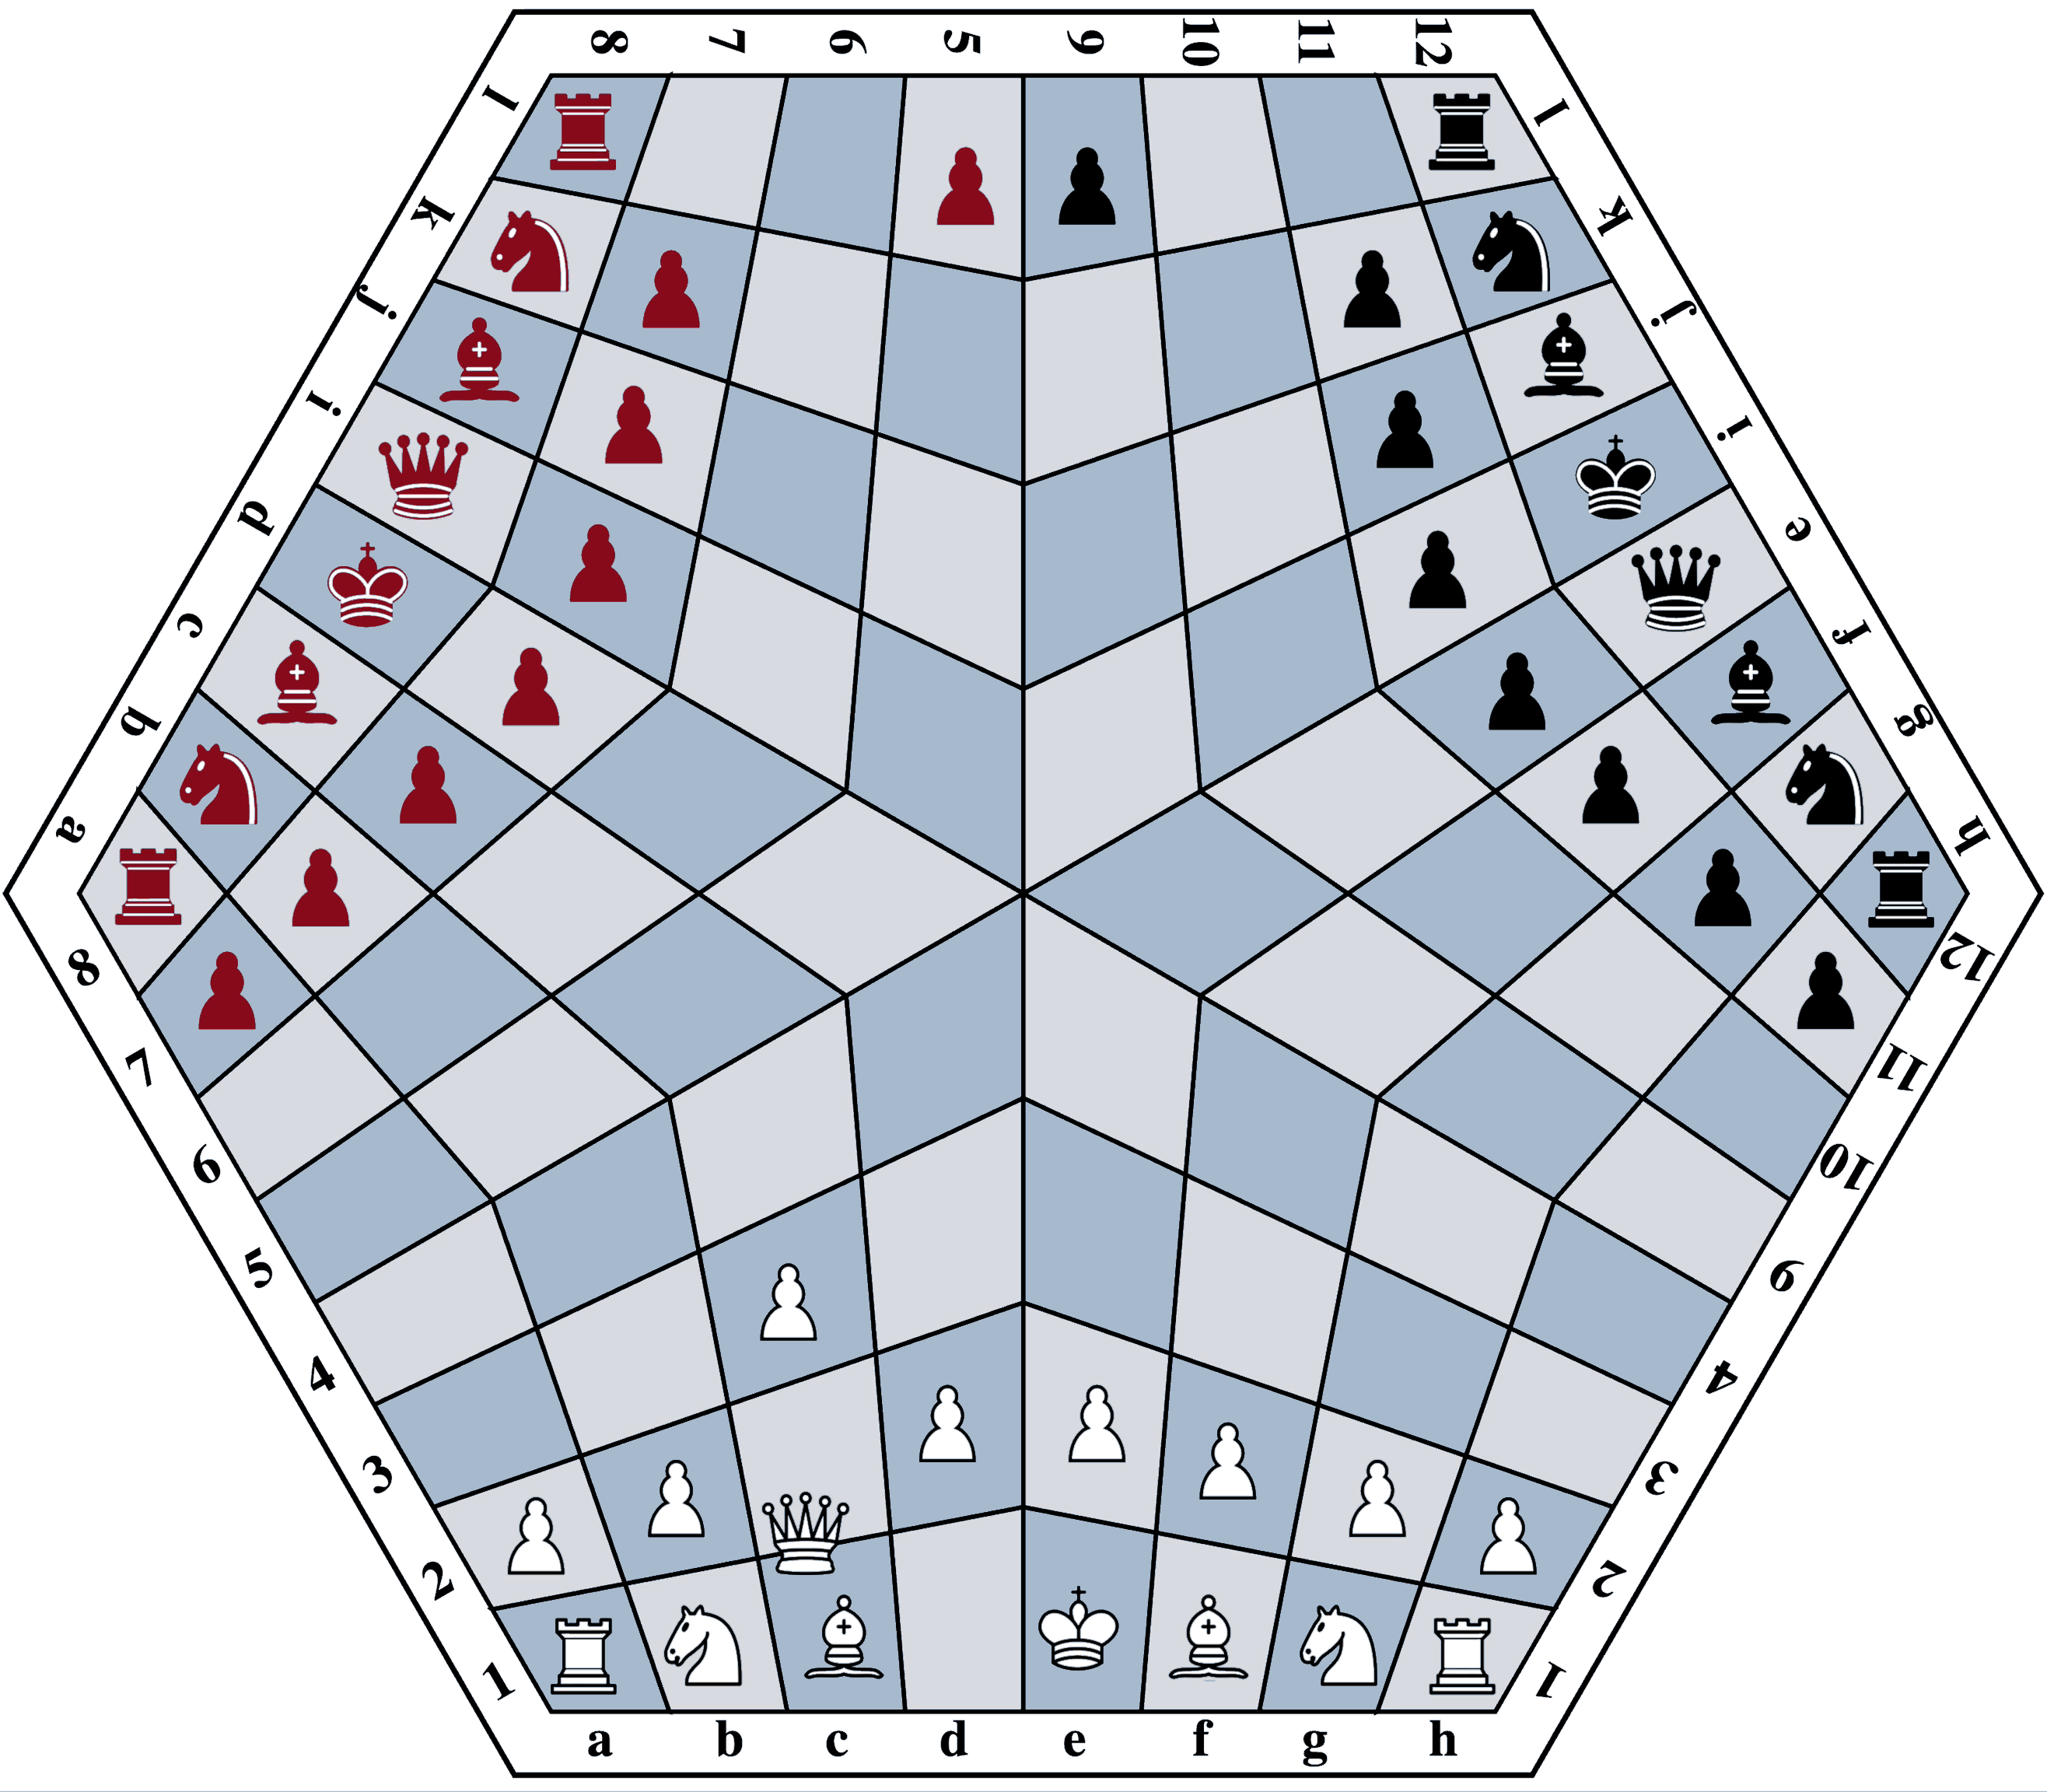 Three-man chess: crazy game as the name implies